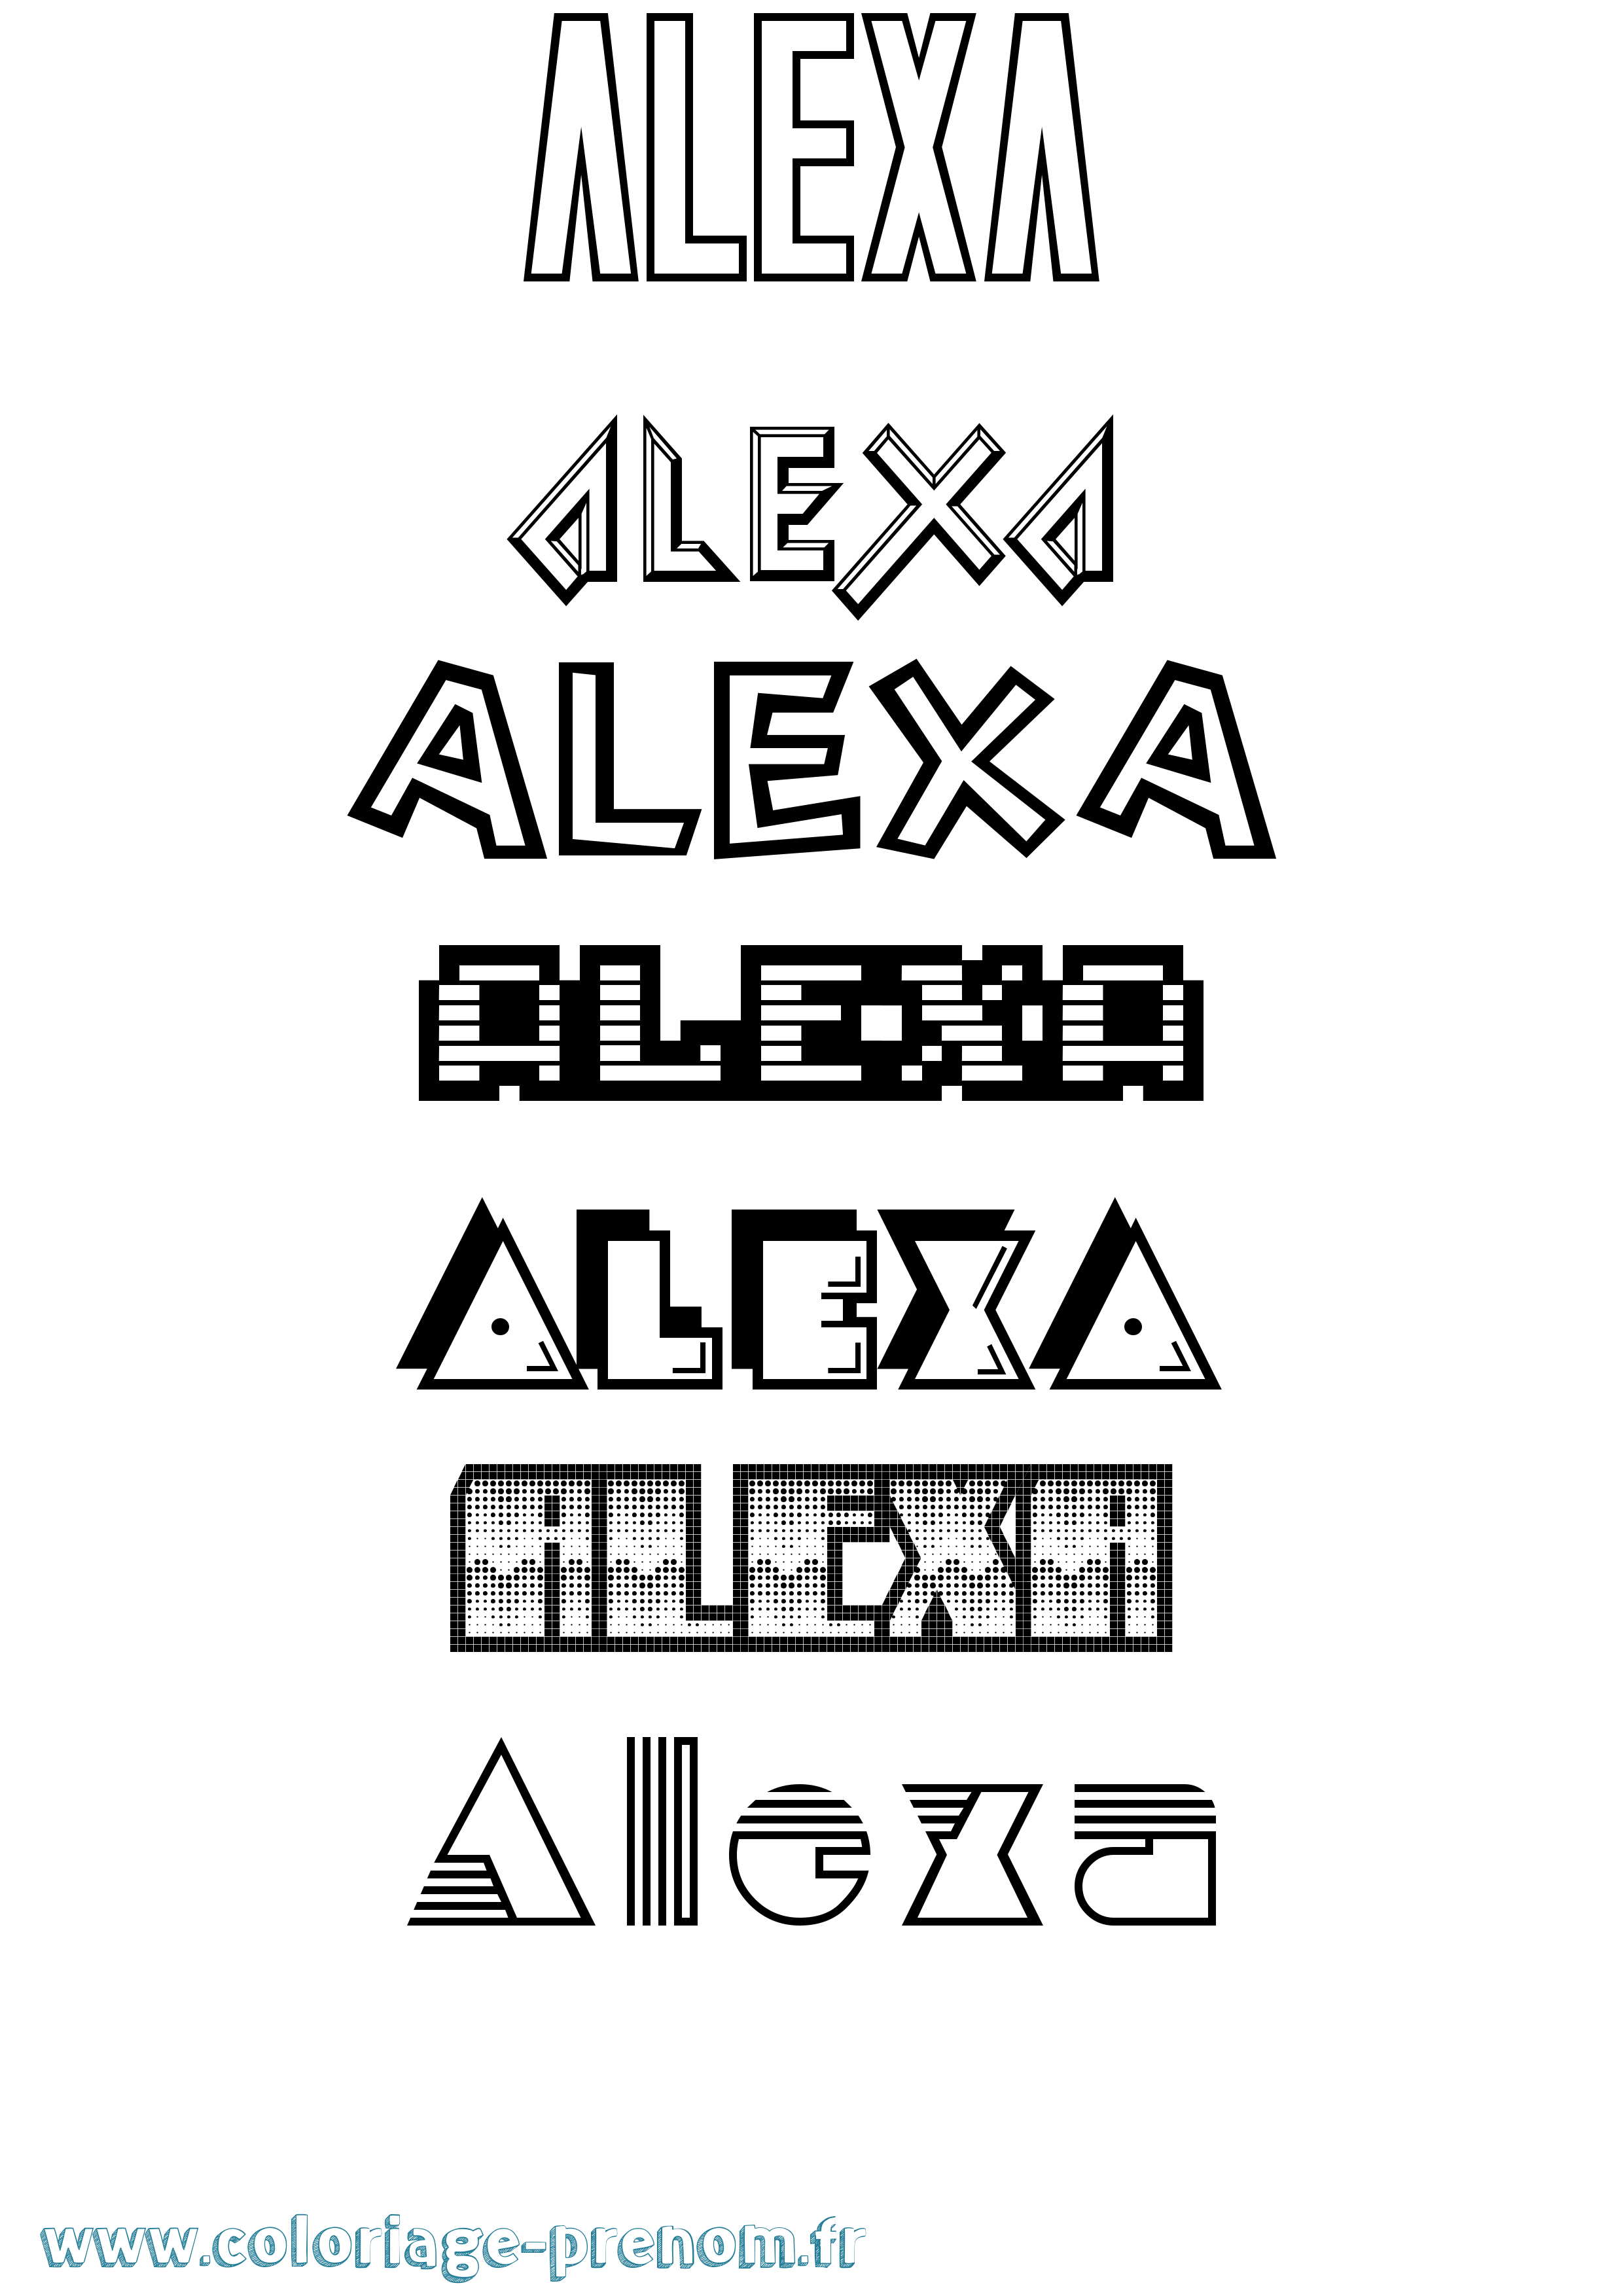 Coloriage prénom Alexa Jeux Vidéos